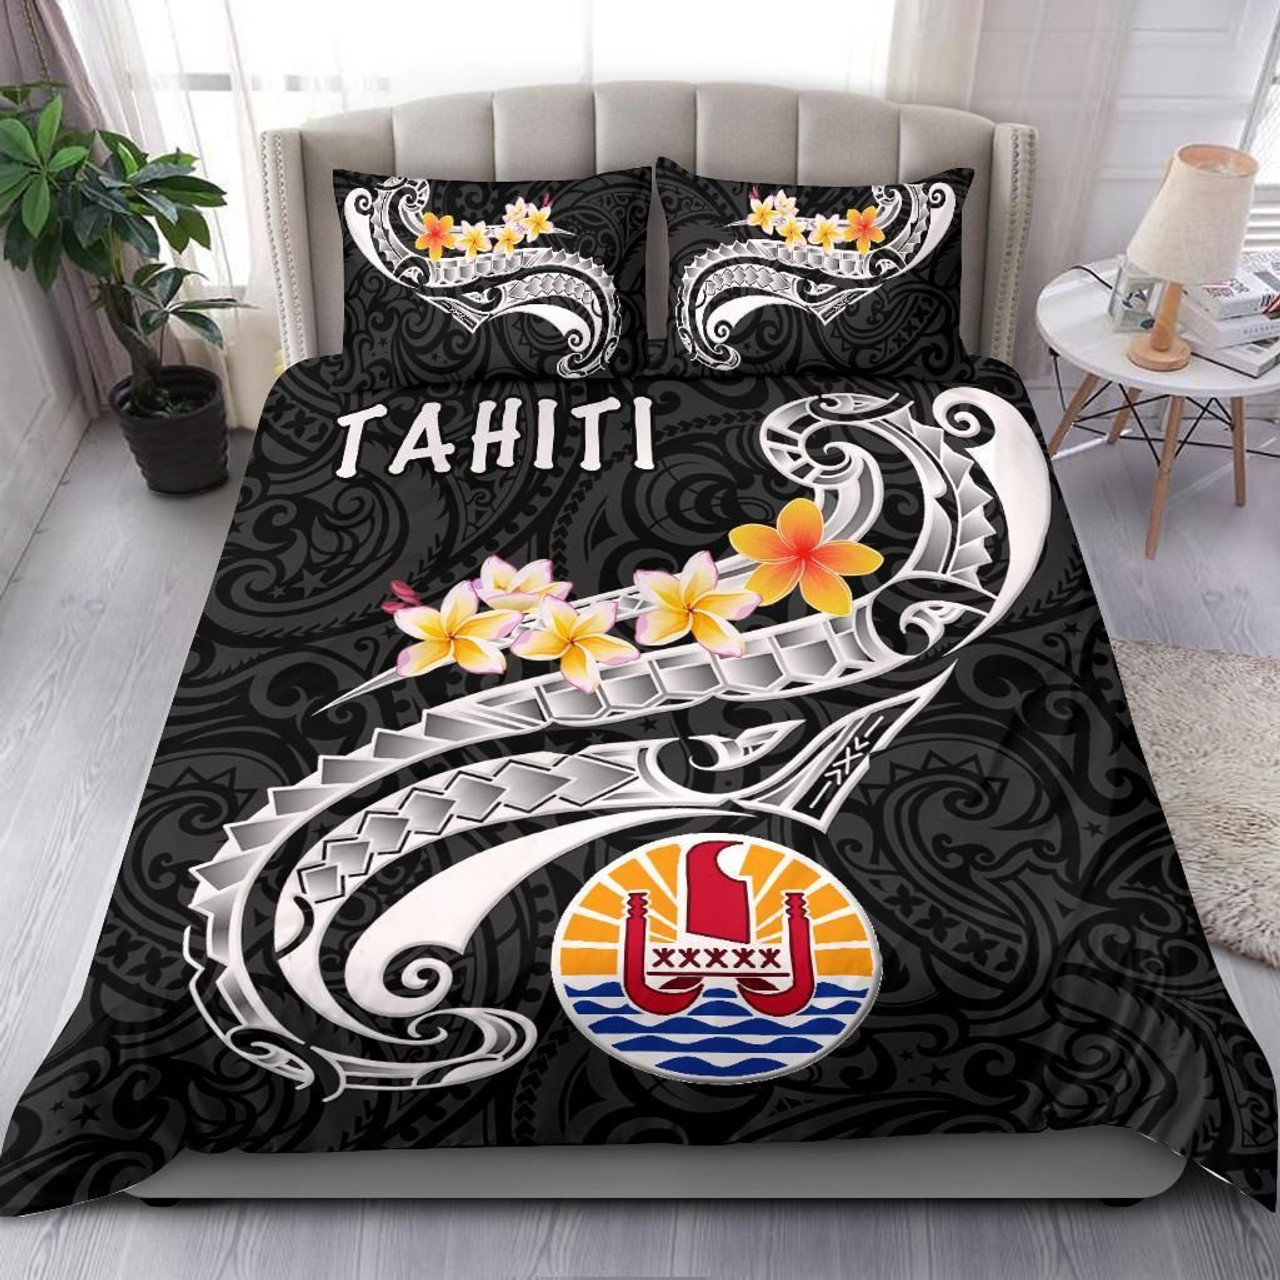 Tahiti Bedding Set - Tahiti Seal Polynesian Patterns Plumeria (Black) 1